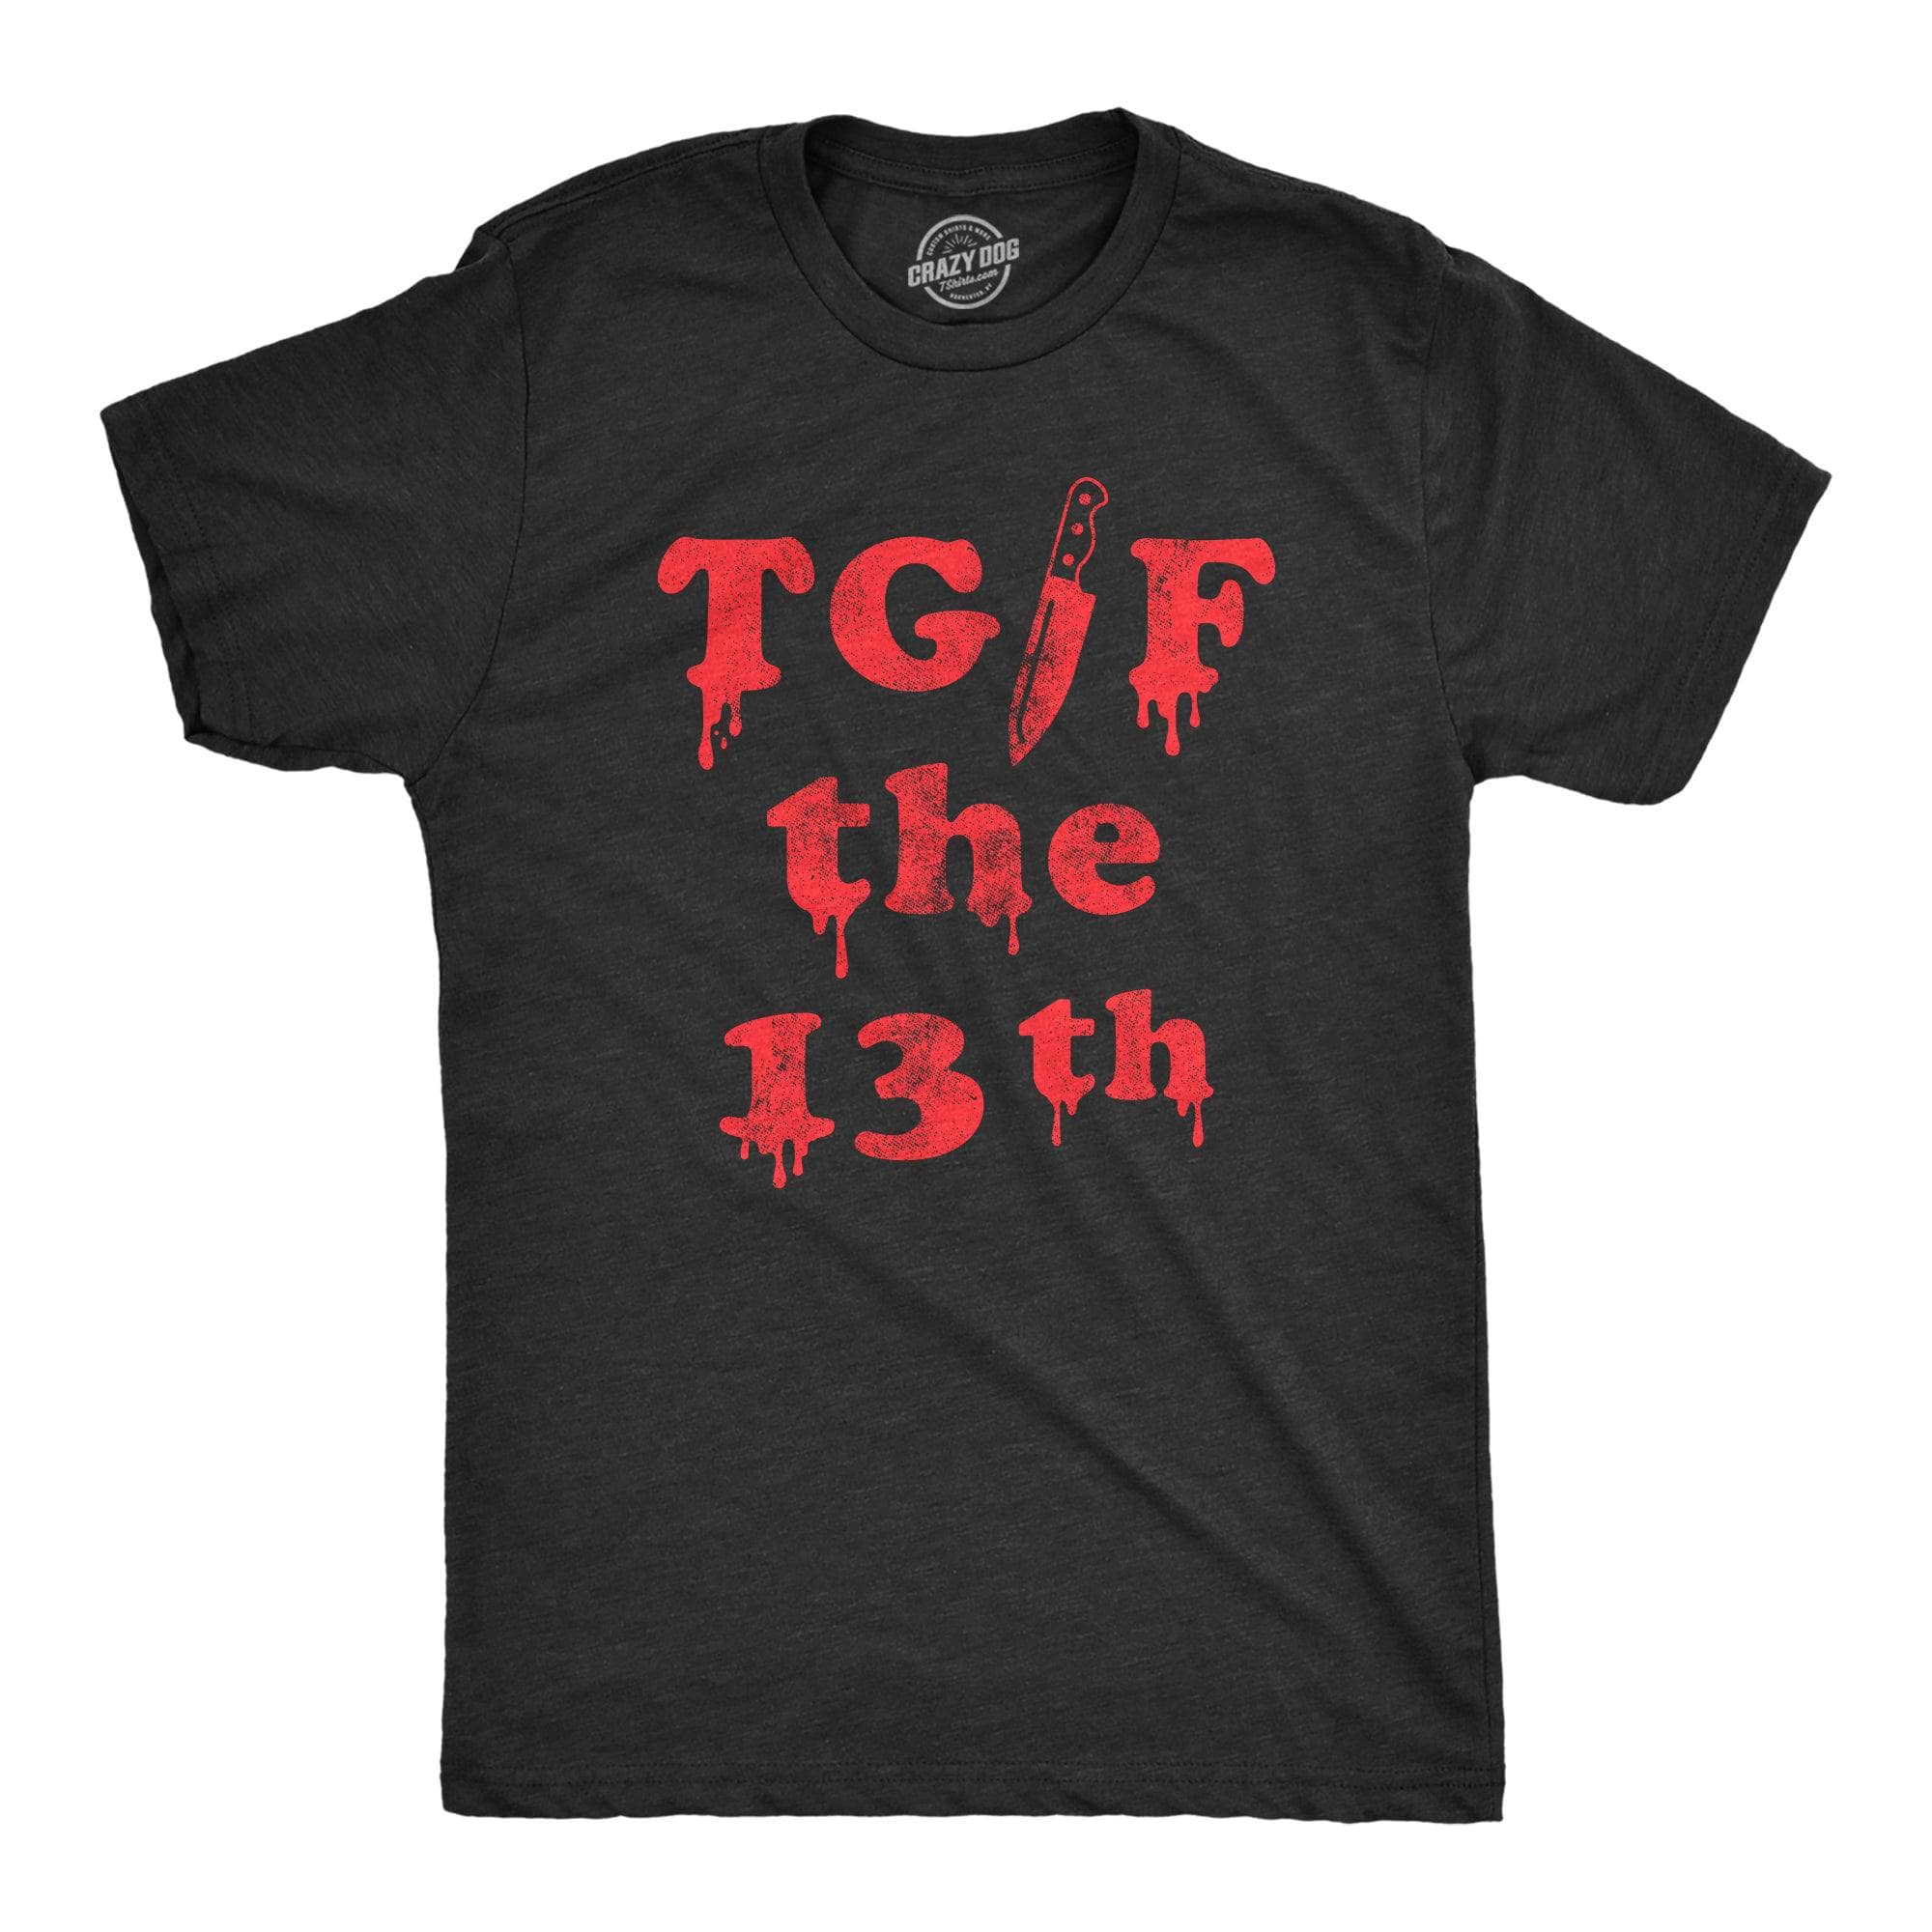 TGIF the 13th Men's Tshirt  -  Crazy Dog T-Shirts